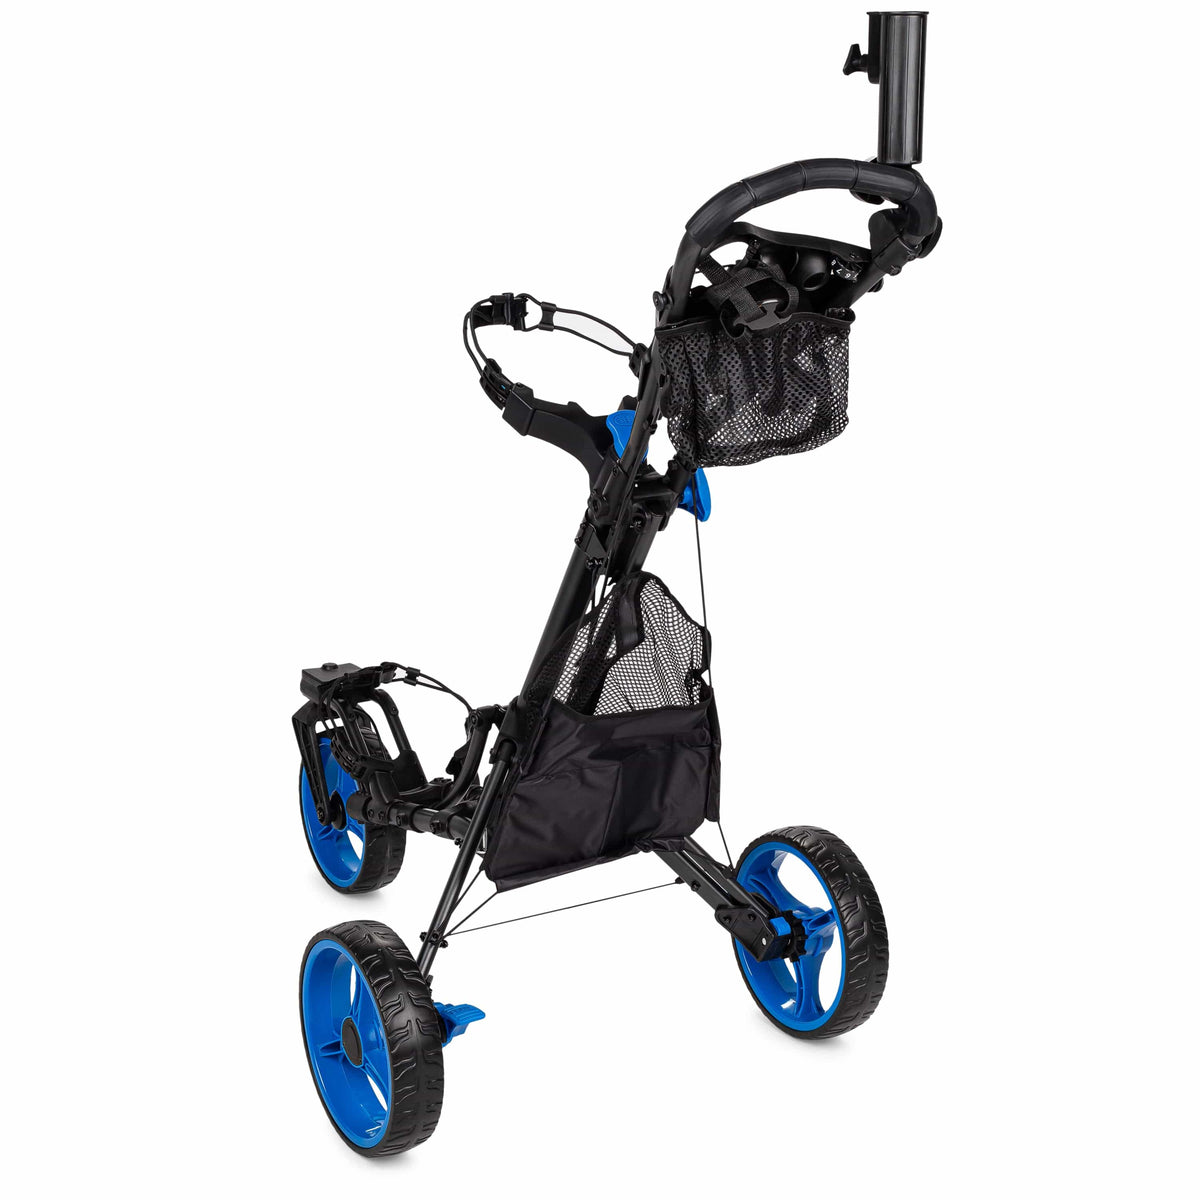 Founders Club Swerve 3 Wheel Golf Cart - Charcoal/Blue